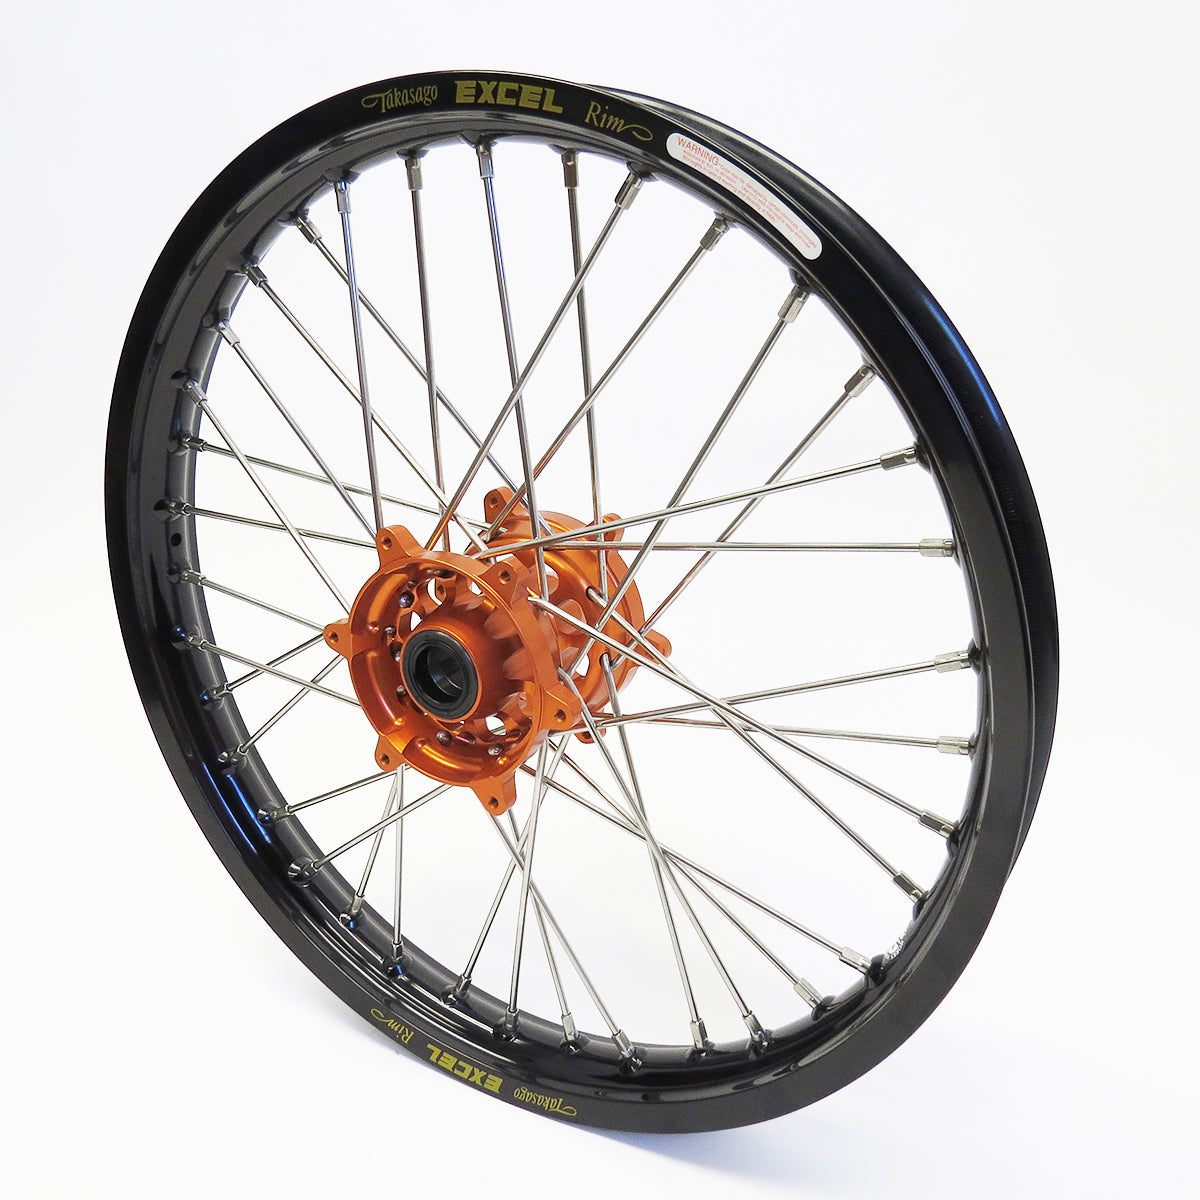 KTM front wheel built by Woody's with black rim and orange billet hub.